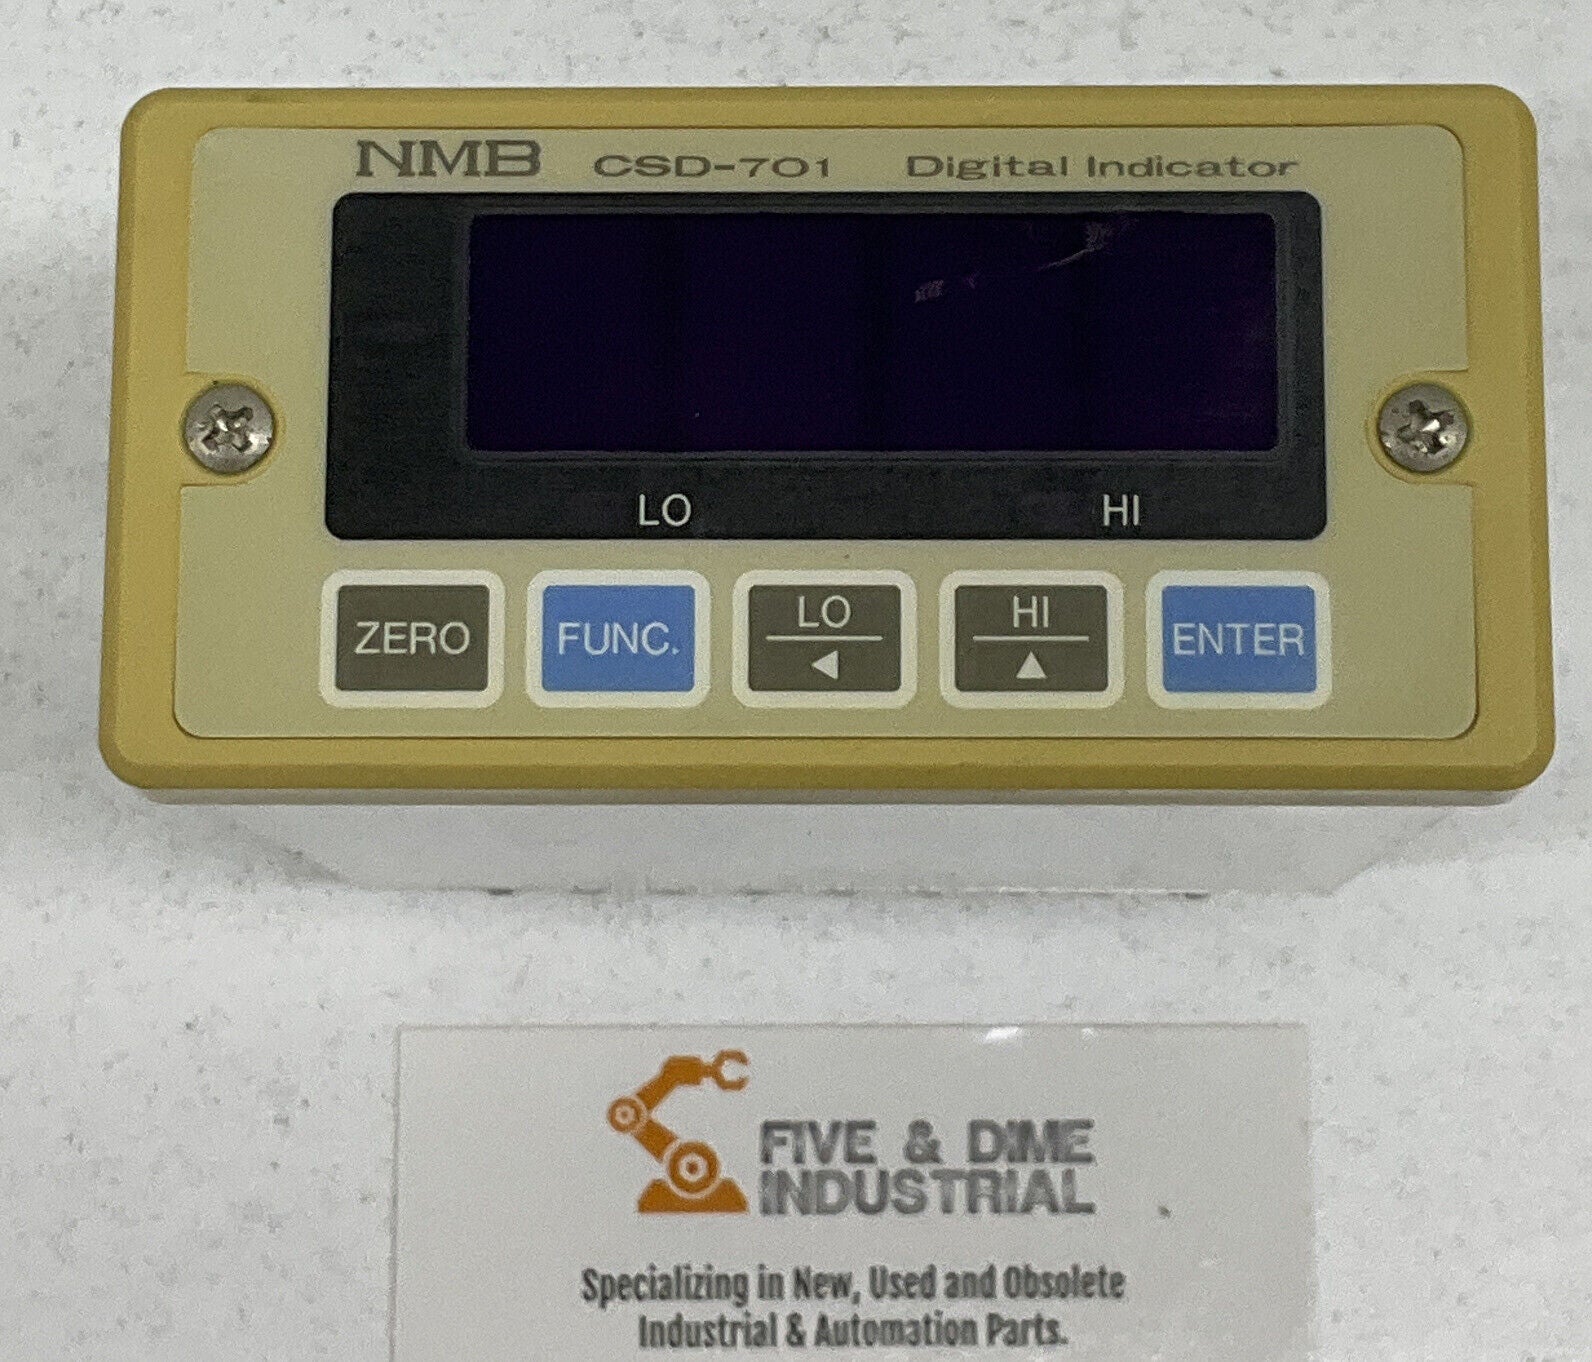 Minebea NMB CSD-701 CSD-701-15  Digital Indicator  (YE165) - 0